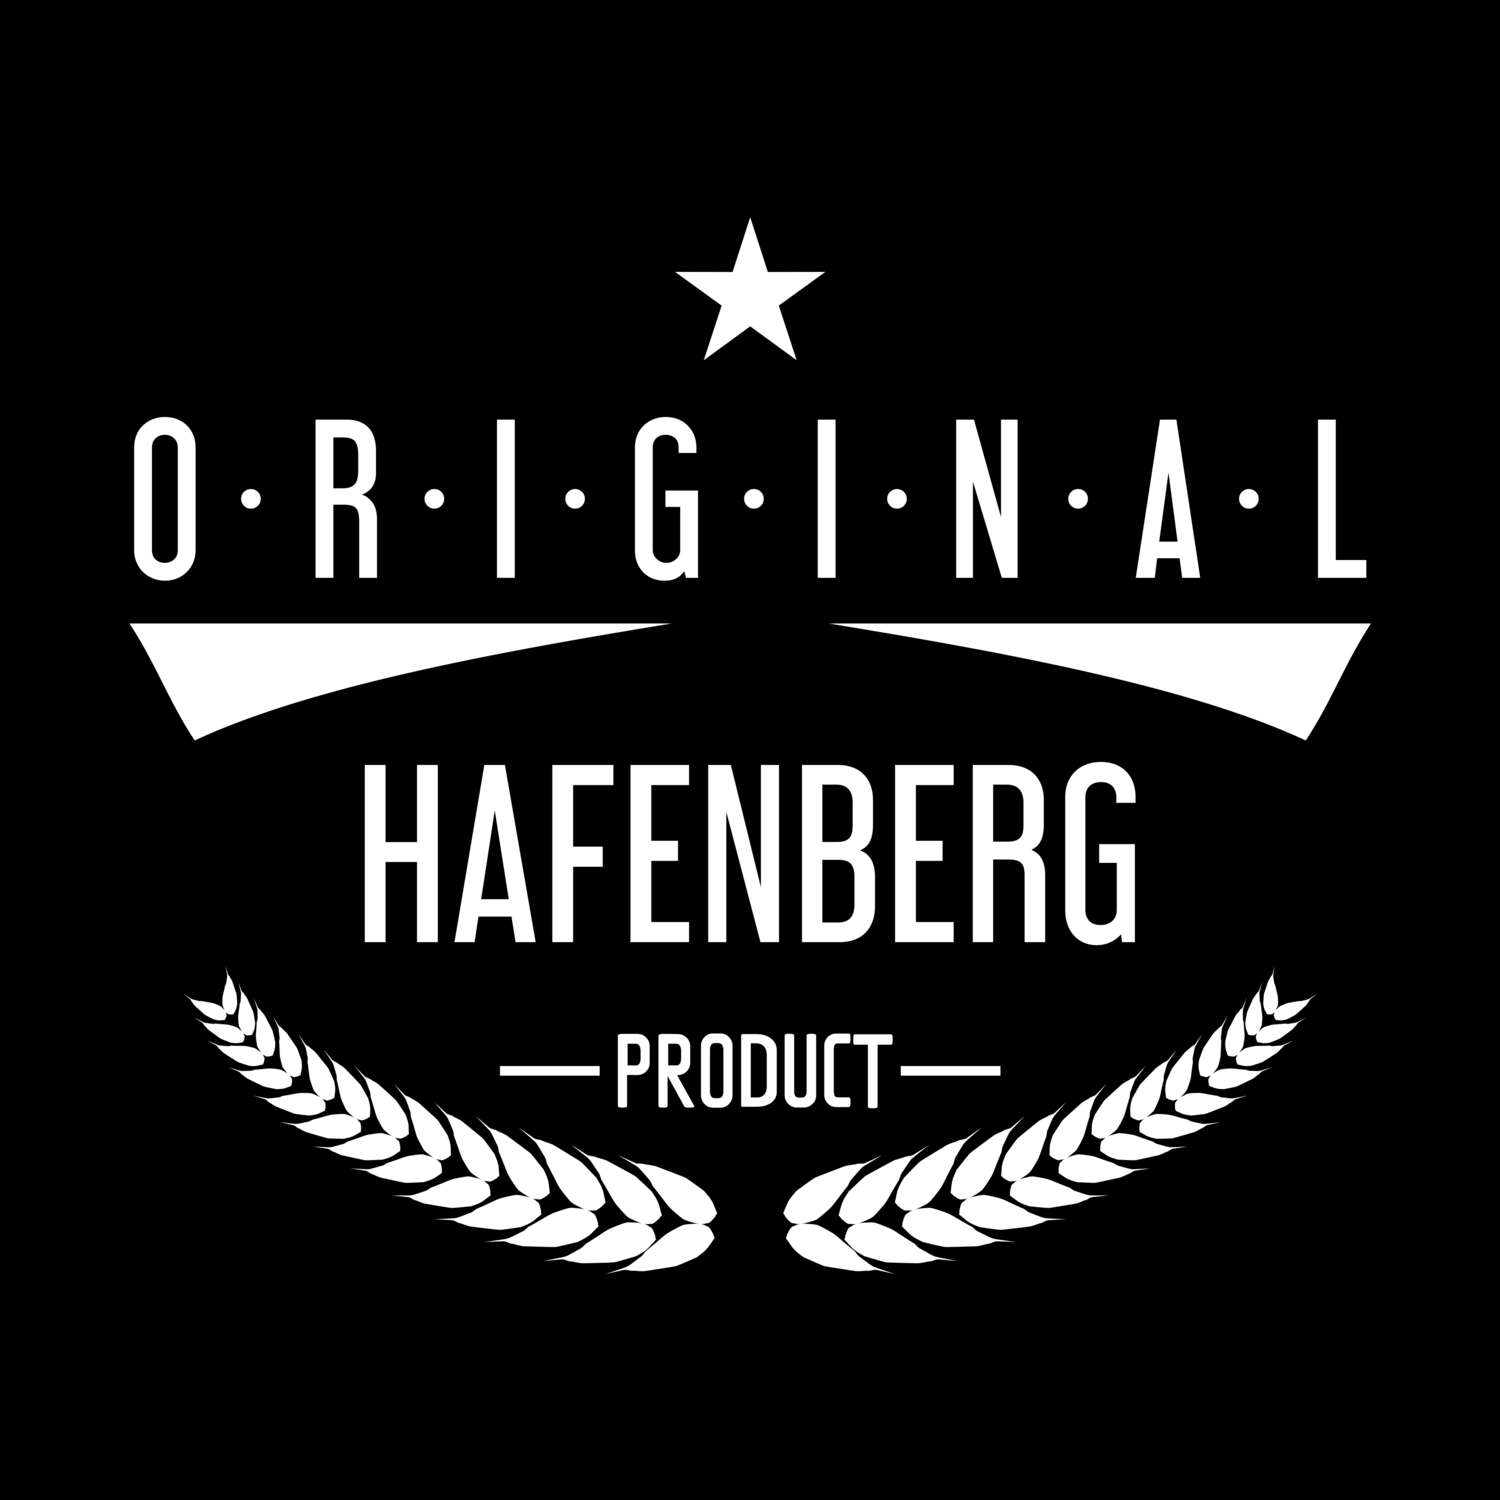 Hafenberg T-Shirt »Original Product«